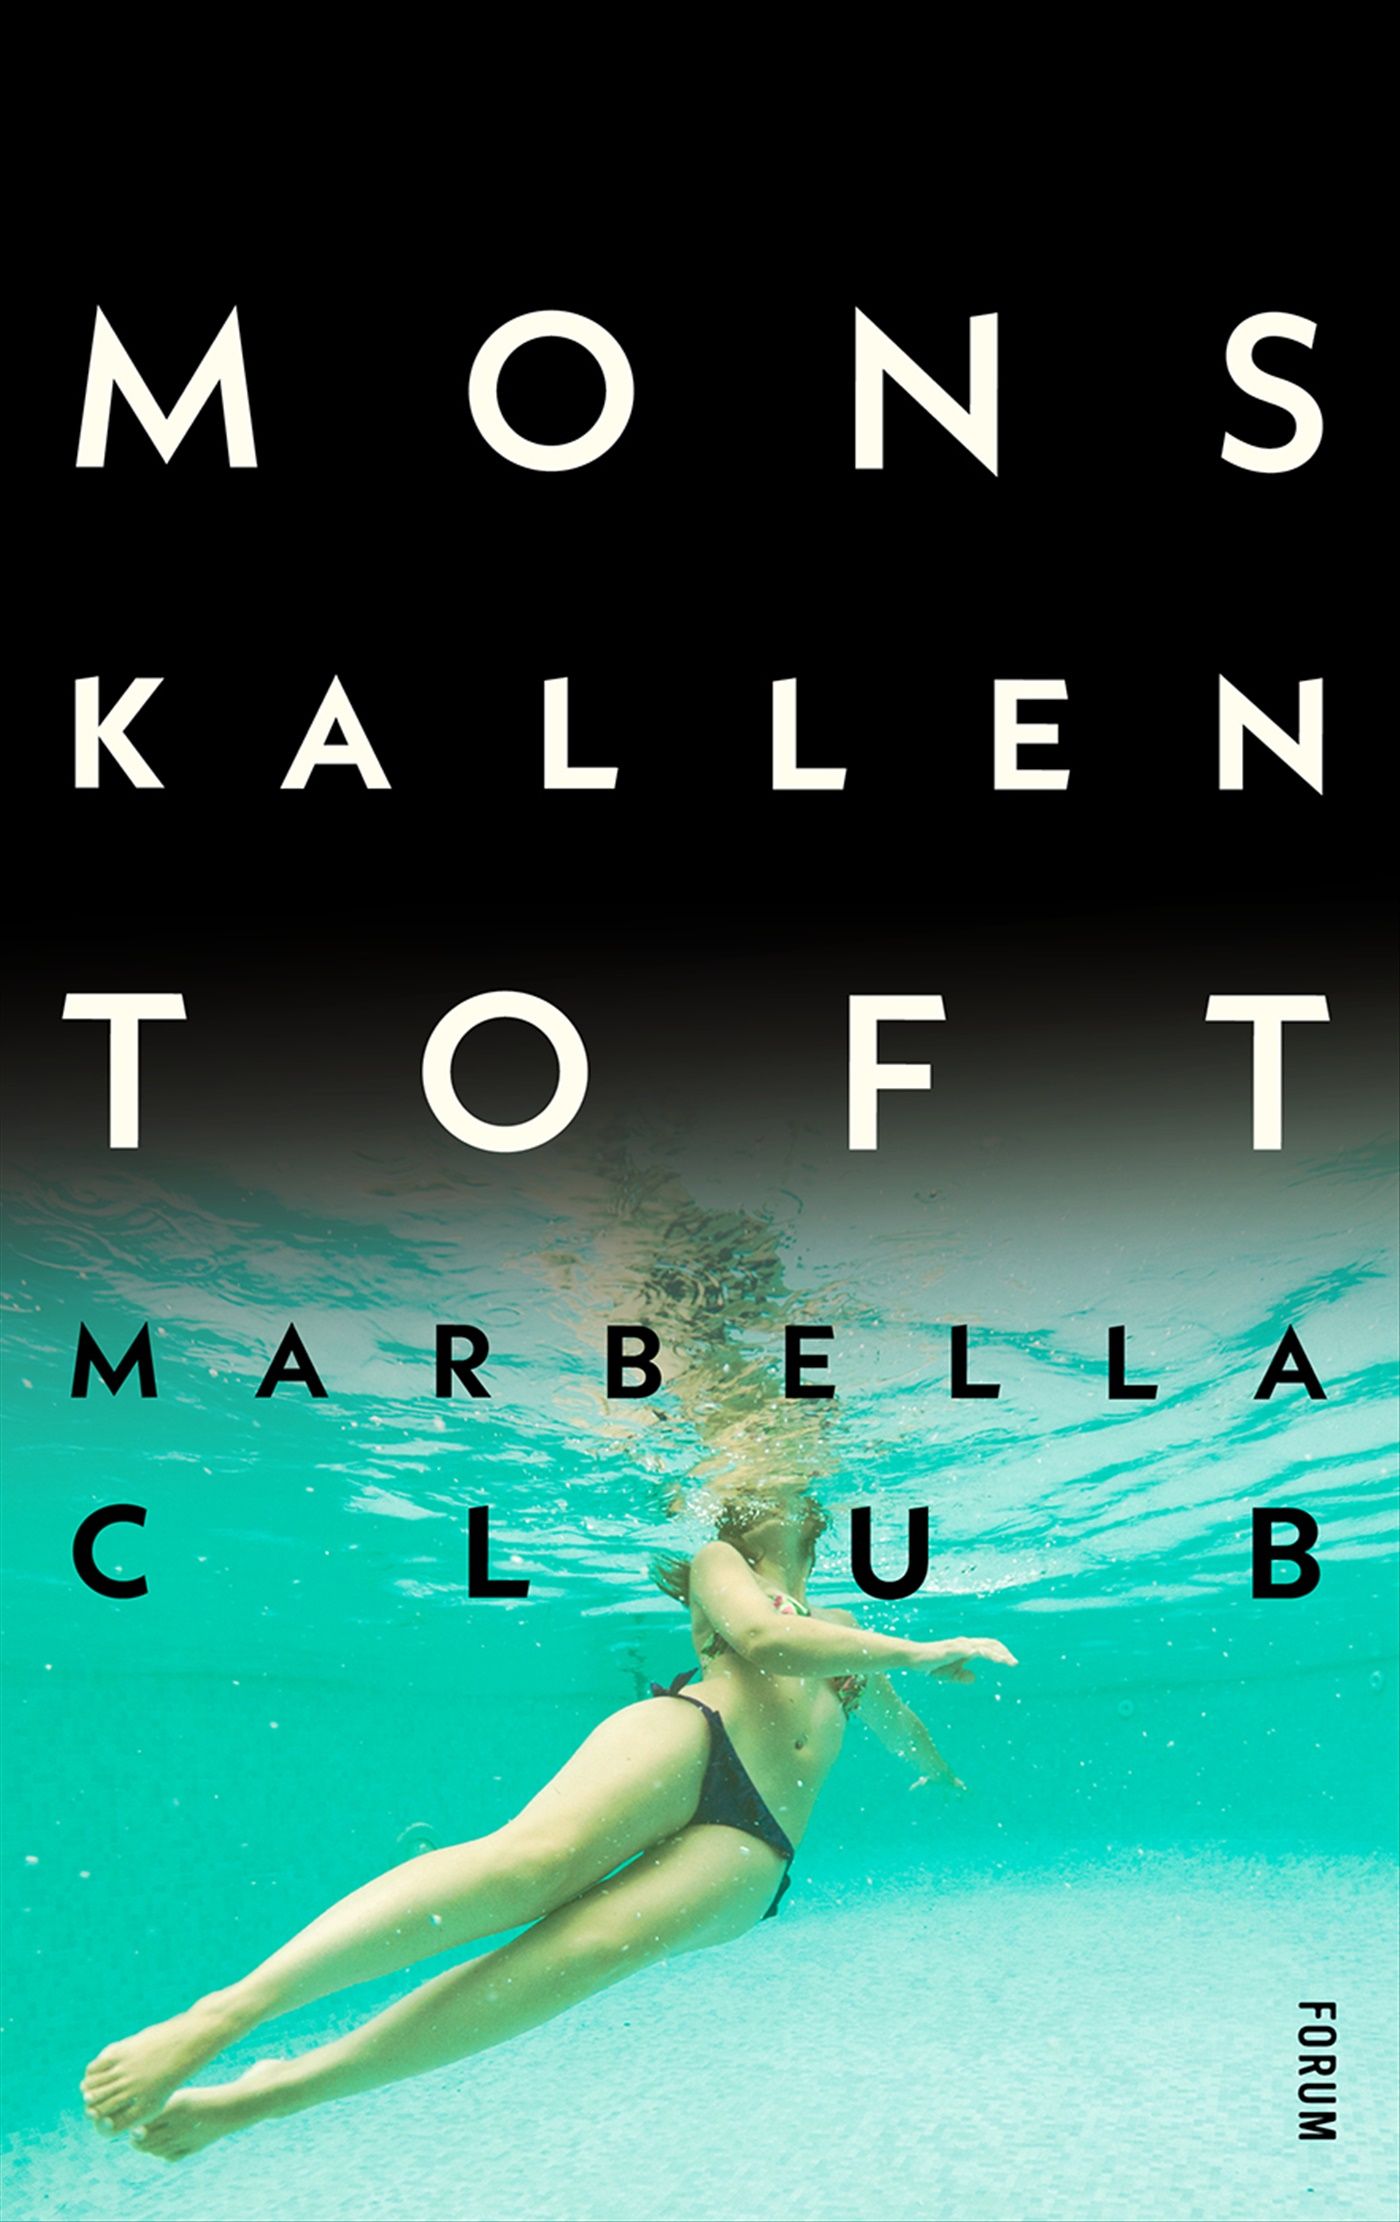 Marbella Club, eBook by Mons Kallentoft